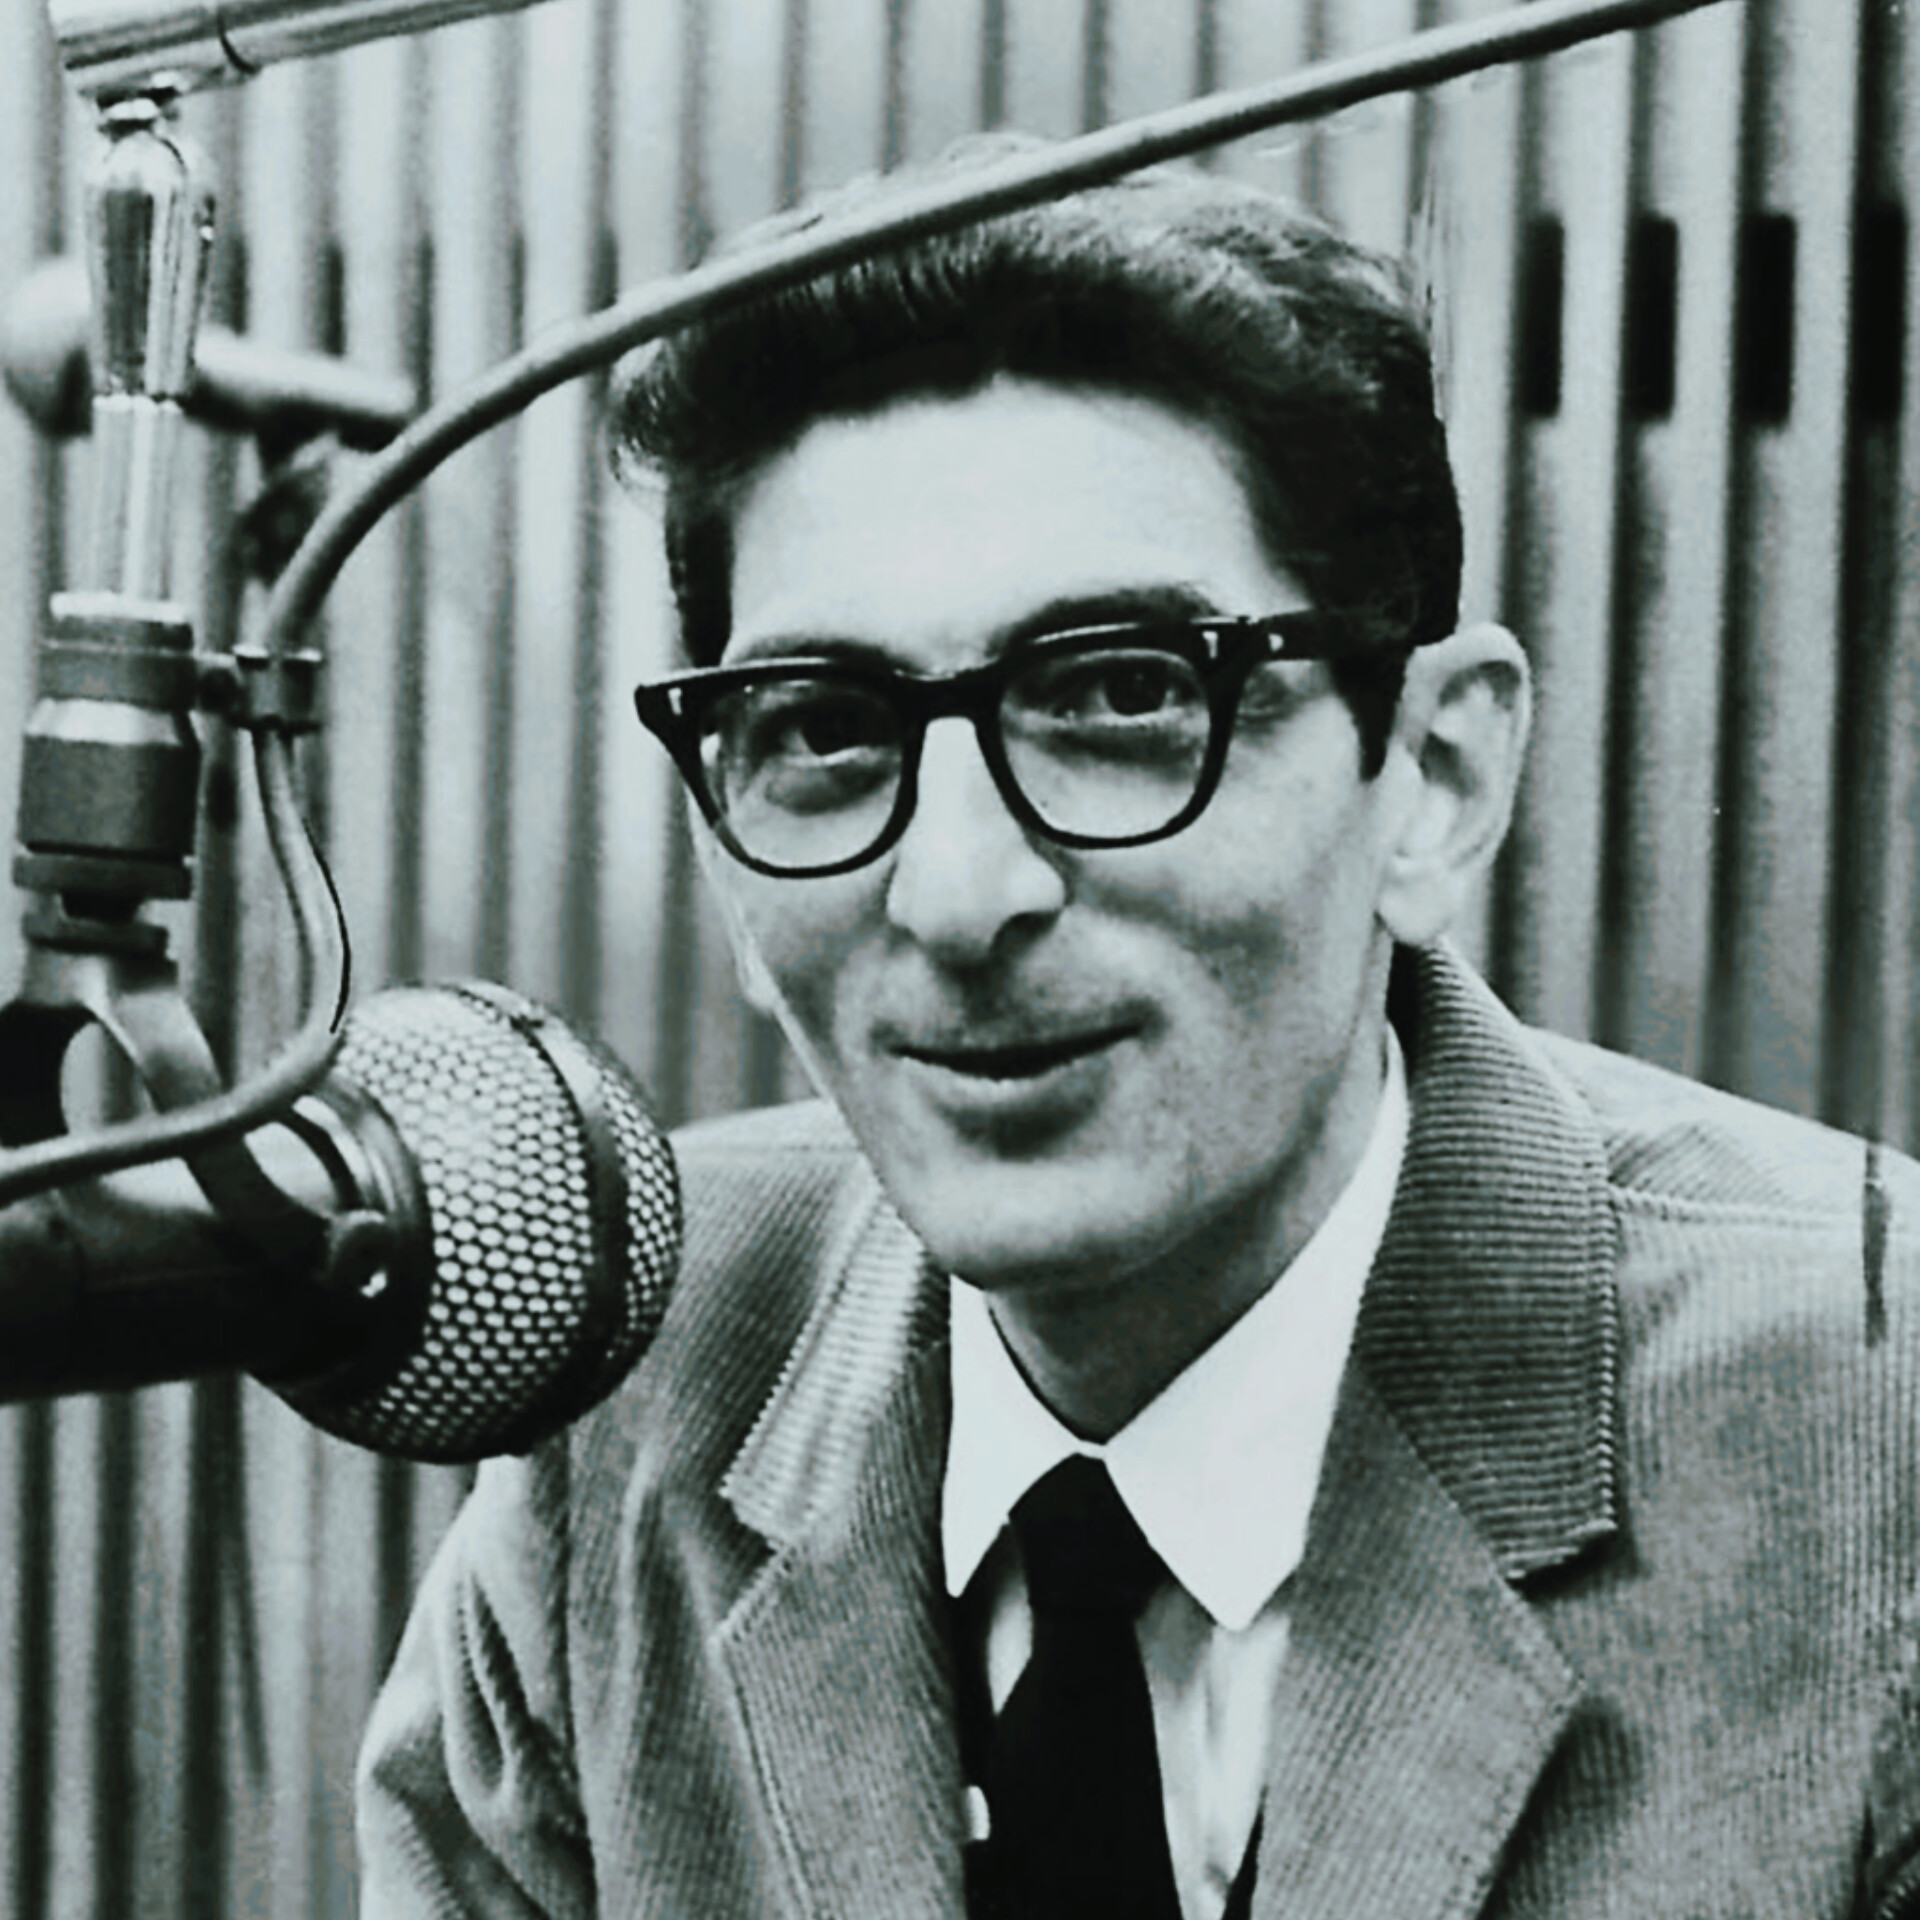 Recalling Dick Biondi: the renowned voice of WLS Radio